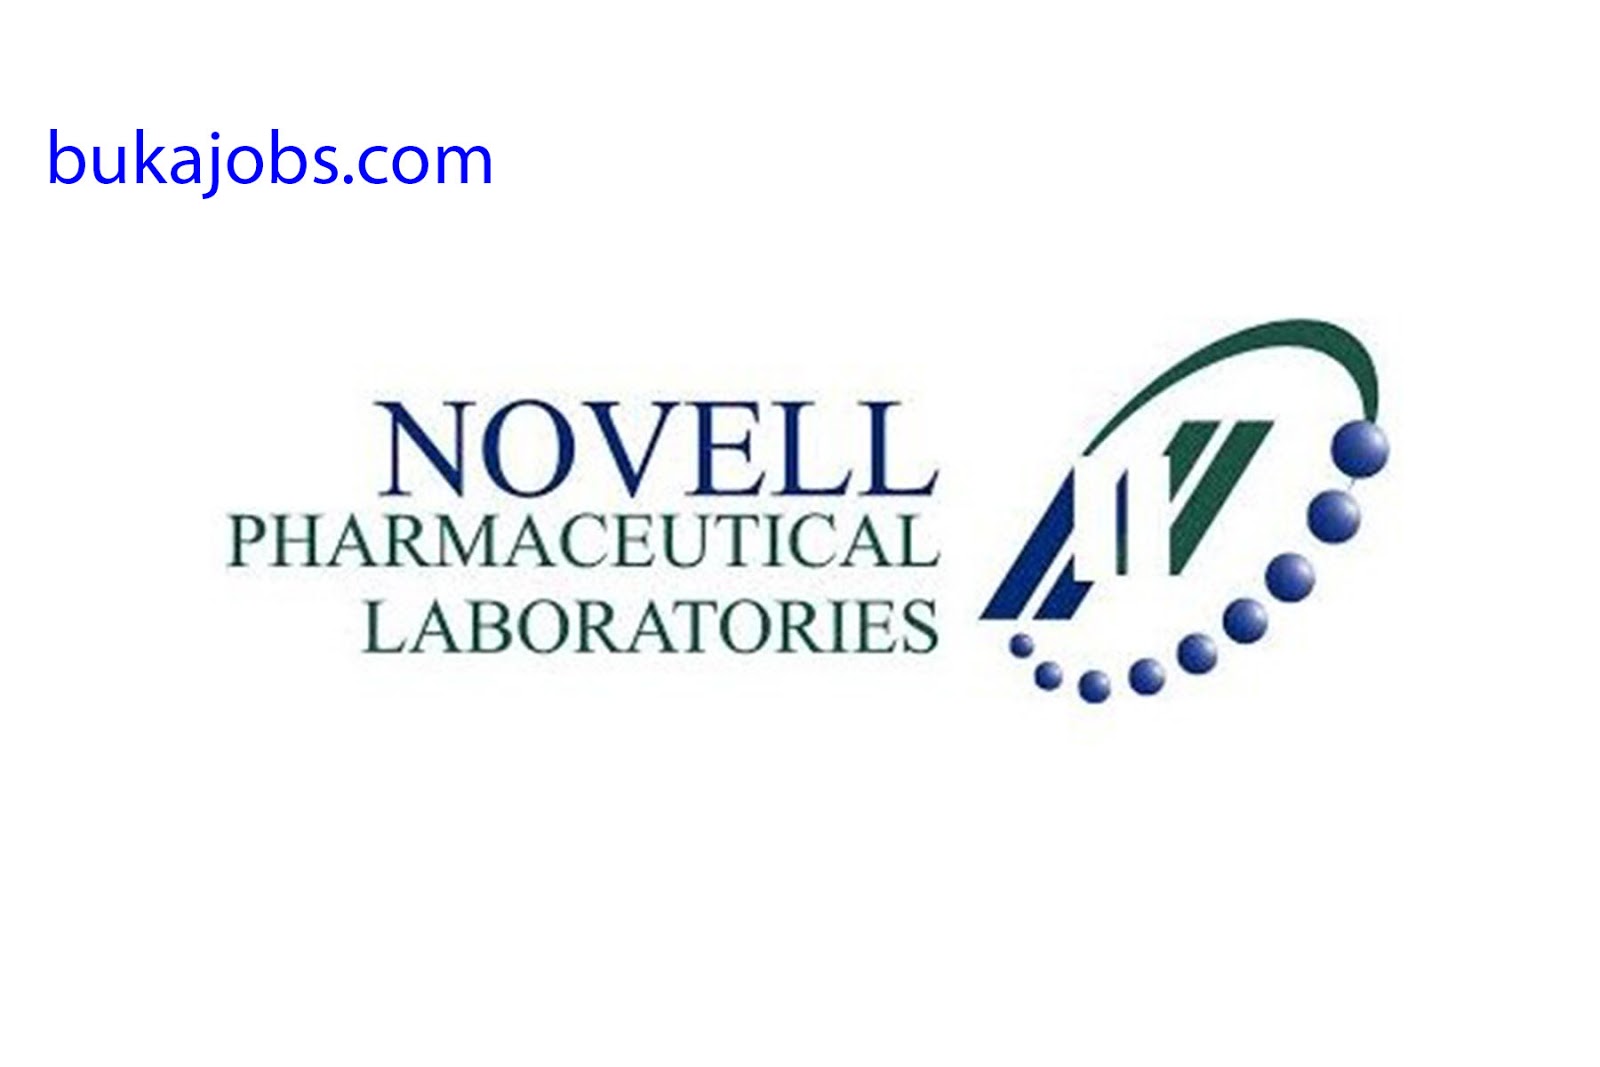 Lowongan Kerja PT Novell Pharmaceutical Laboratories